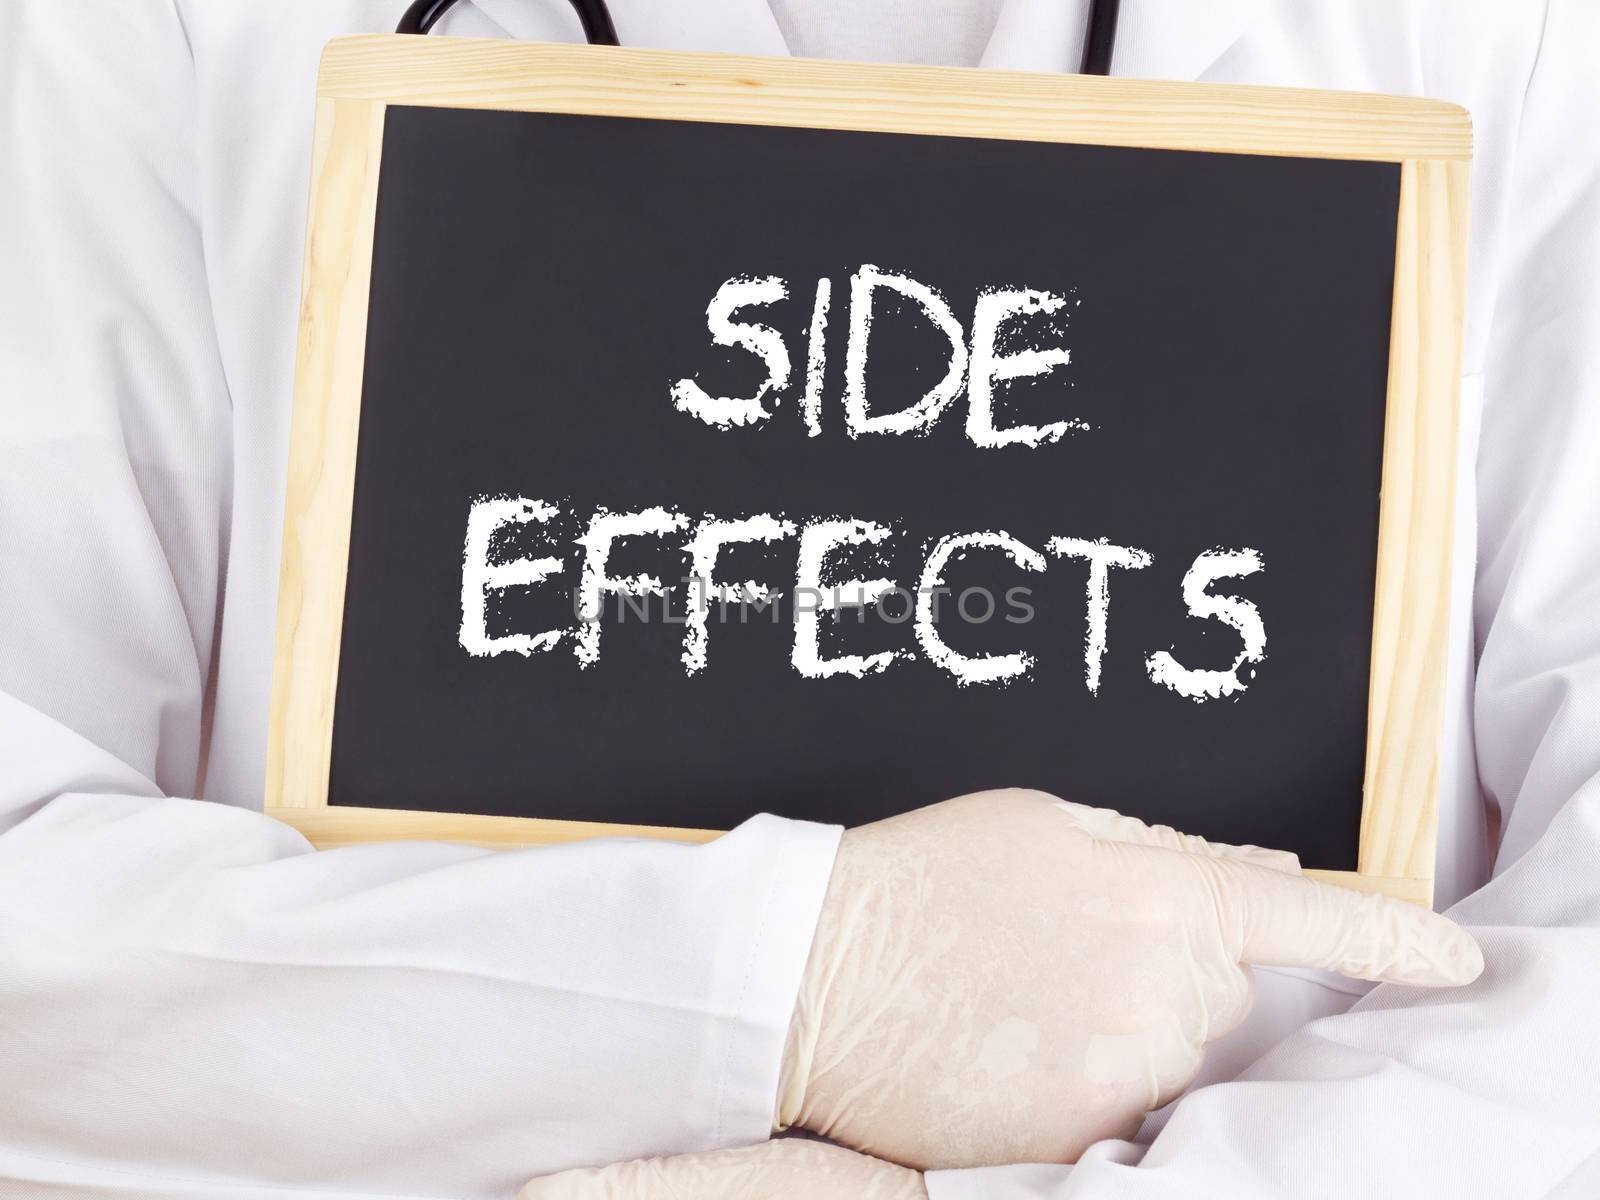 Doctor shows information on blackboard: side effects by gwolters